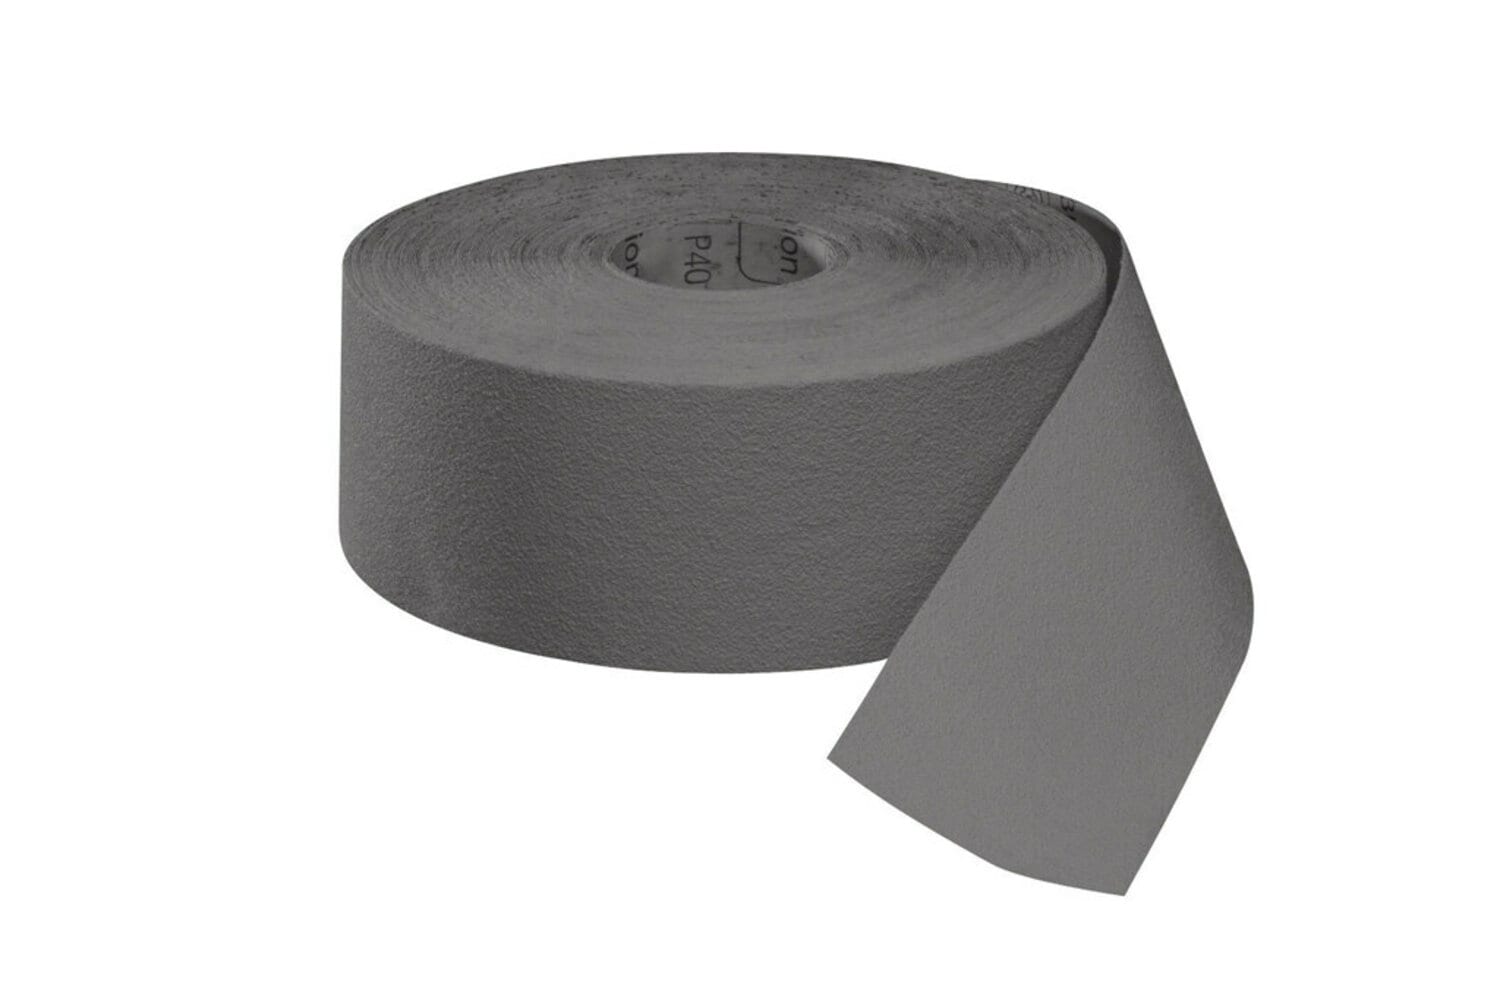 7010508501 - 3M Wetordry Paper Roll 431Q, 80 C-weight, 1-1/4 in x 100 yd, ASO, No
Flex